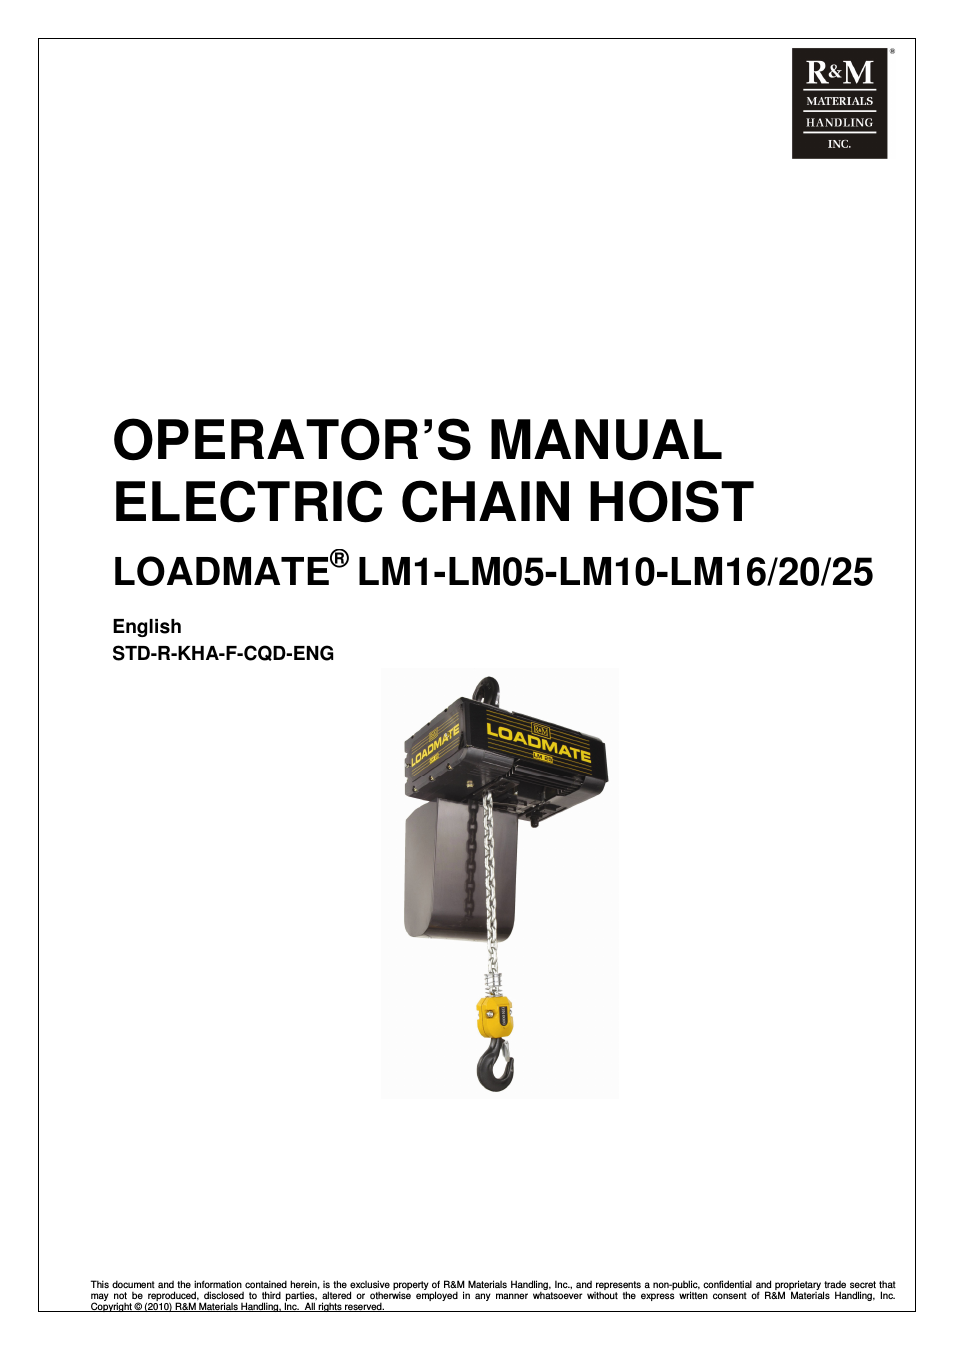 ELECTRIC CHAIN HOISTS LoadMate Chain Hoist General Operation Manual